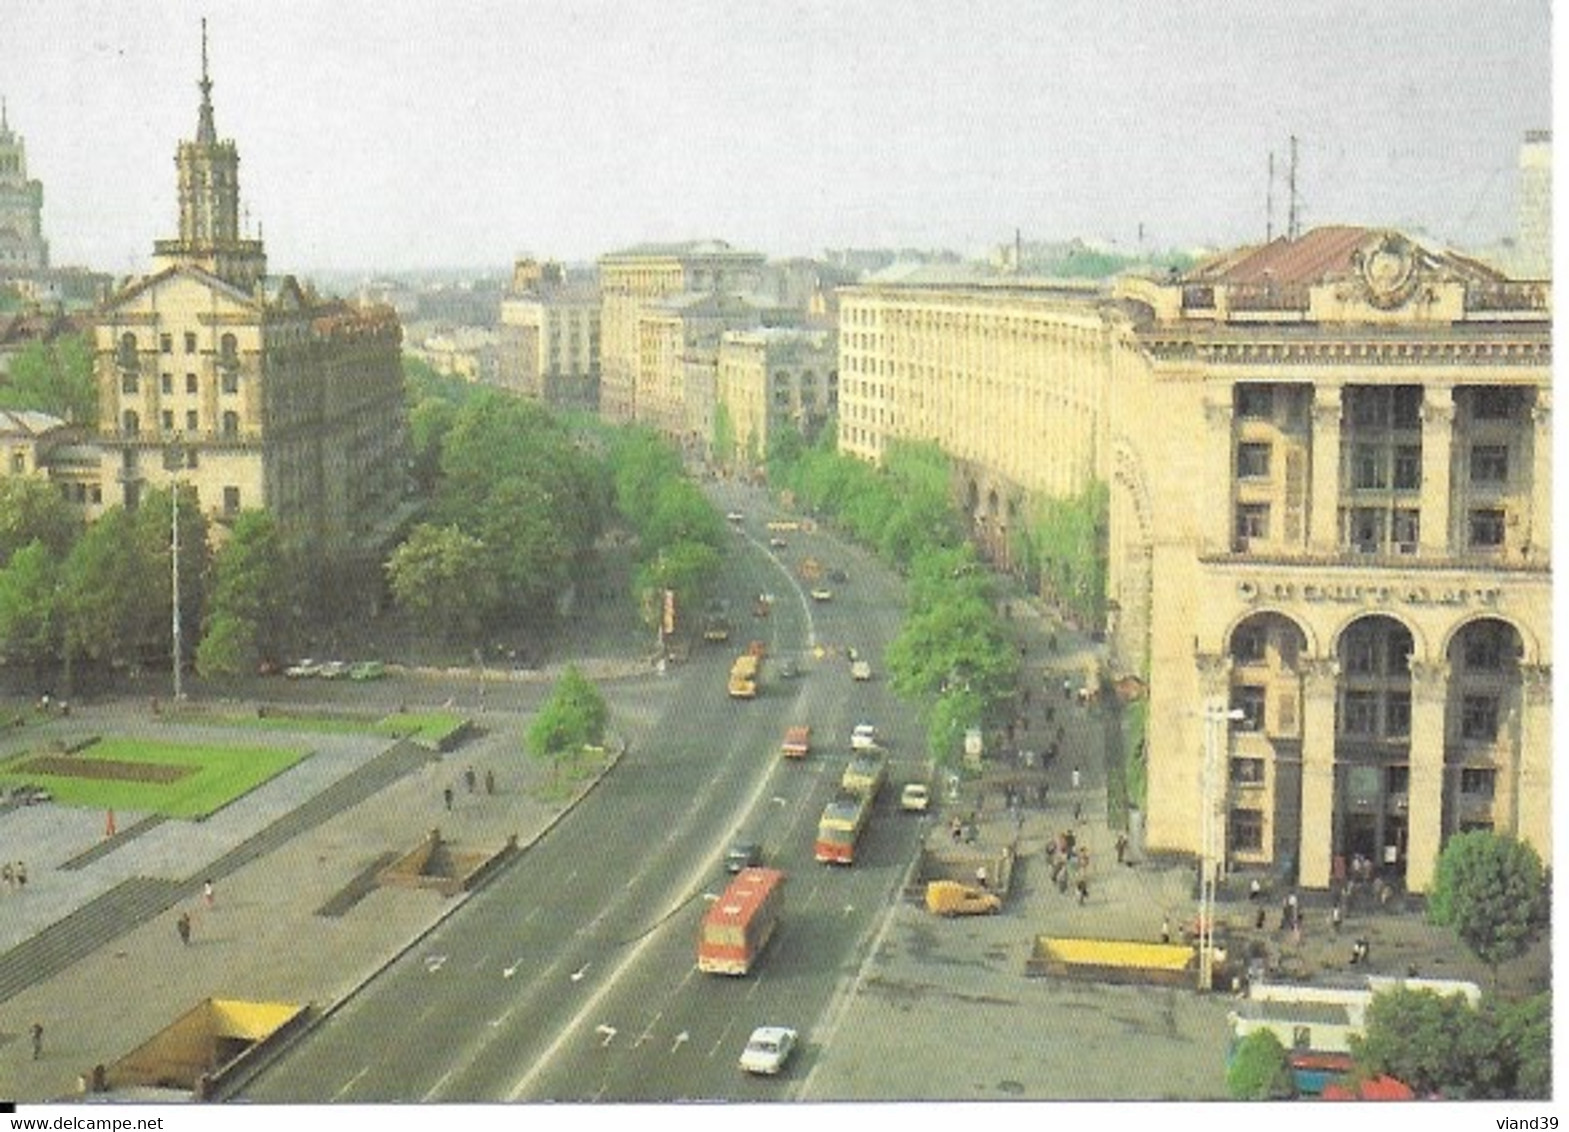 Kiev - 11 vues 10 x 15 cm - 1989. voir scanne. (2)